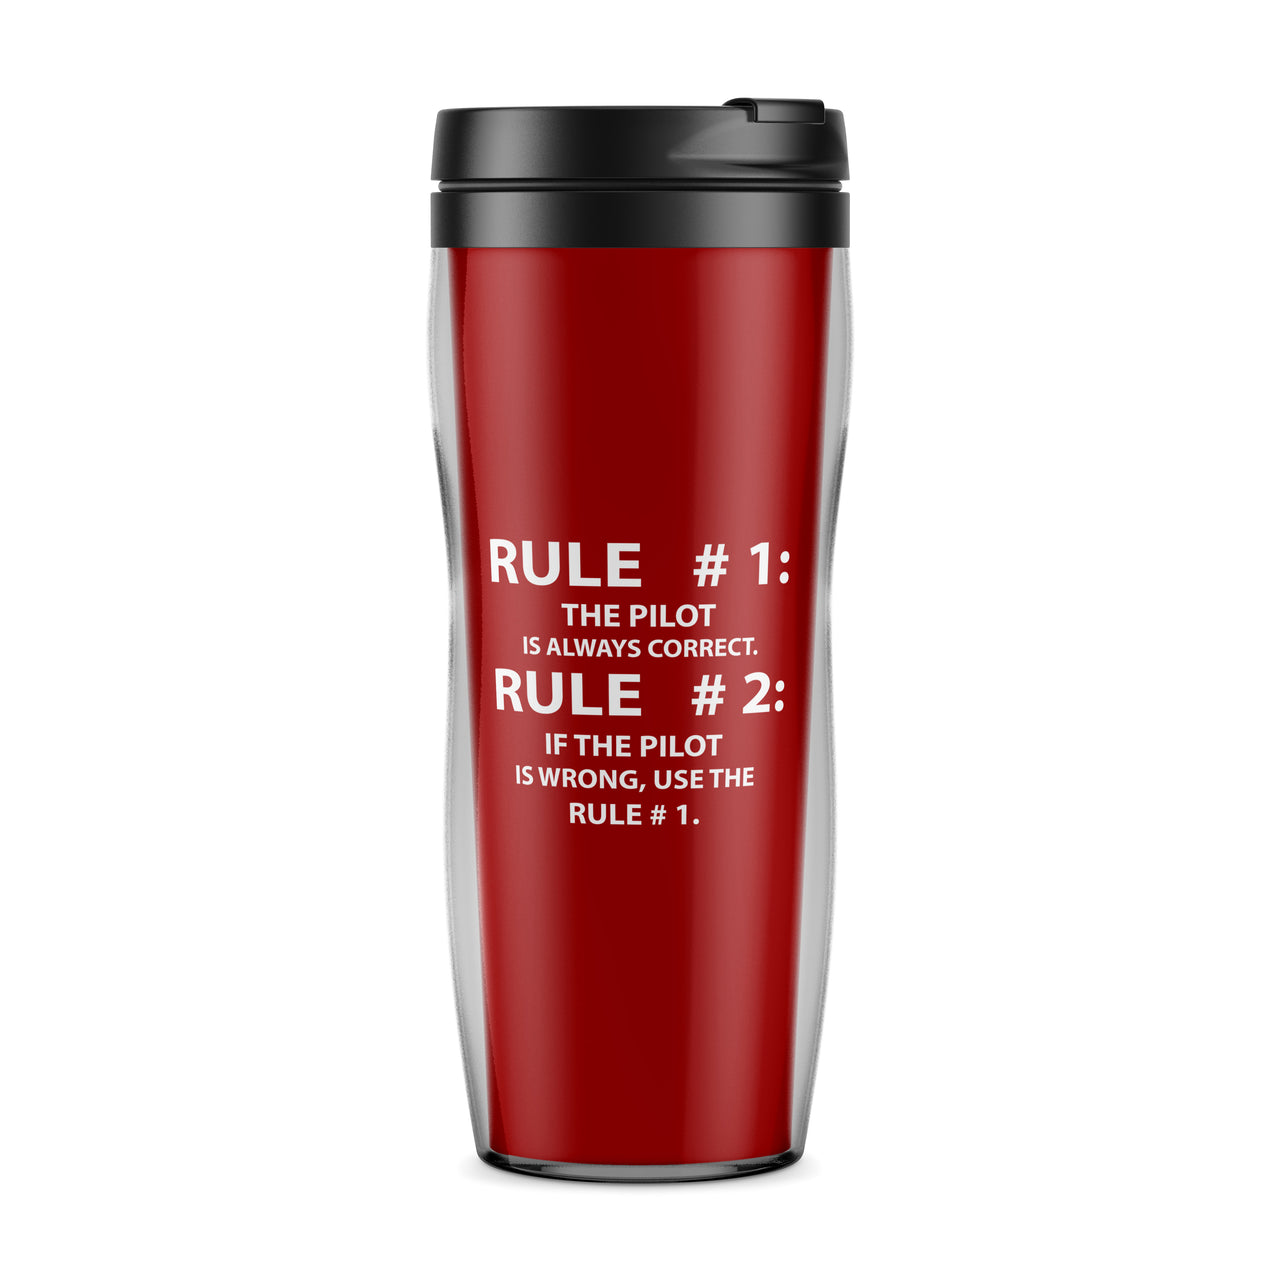 Rule 1 - Pilot is Always Correct Designed Travel Mugs